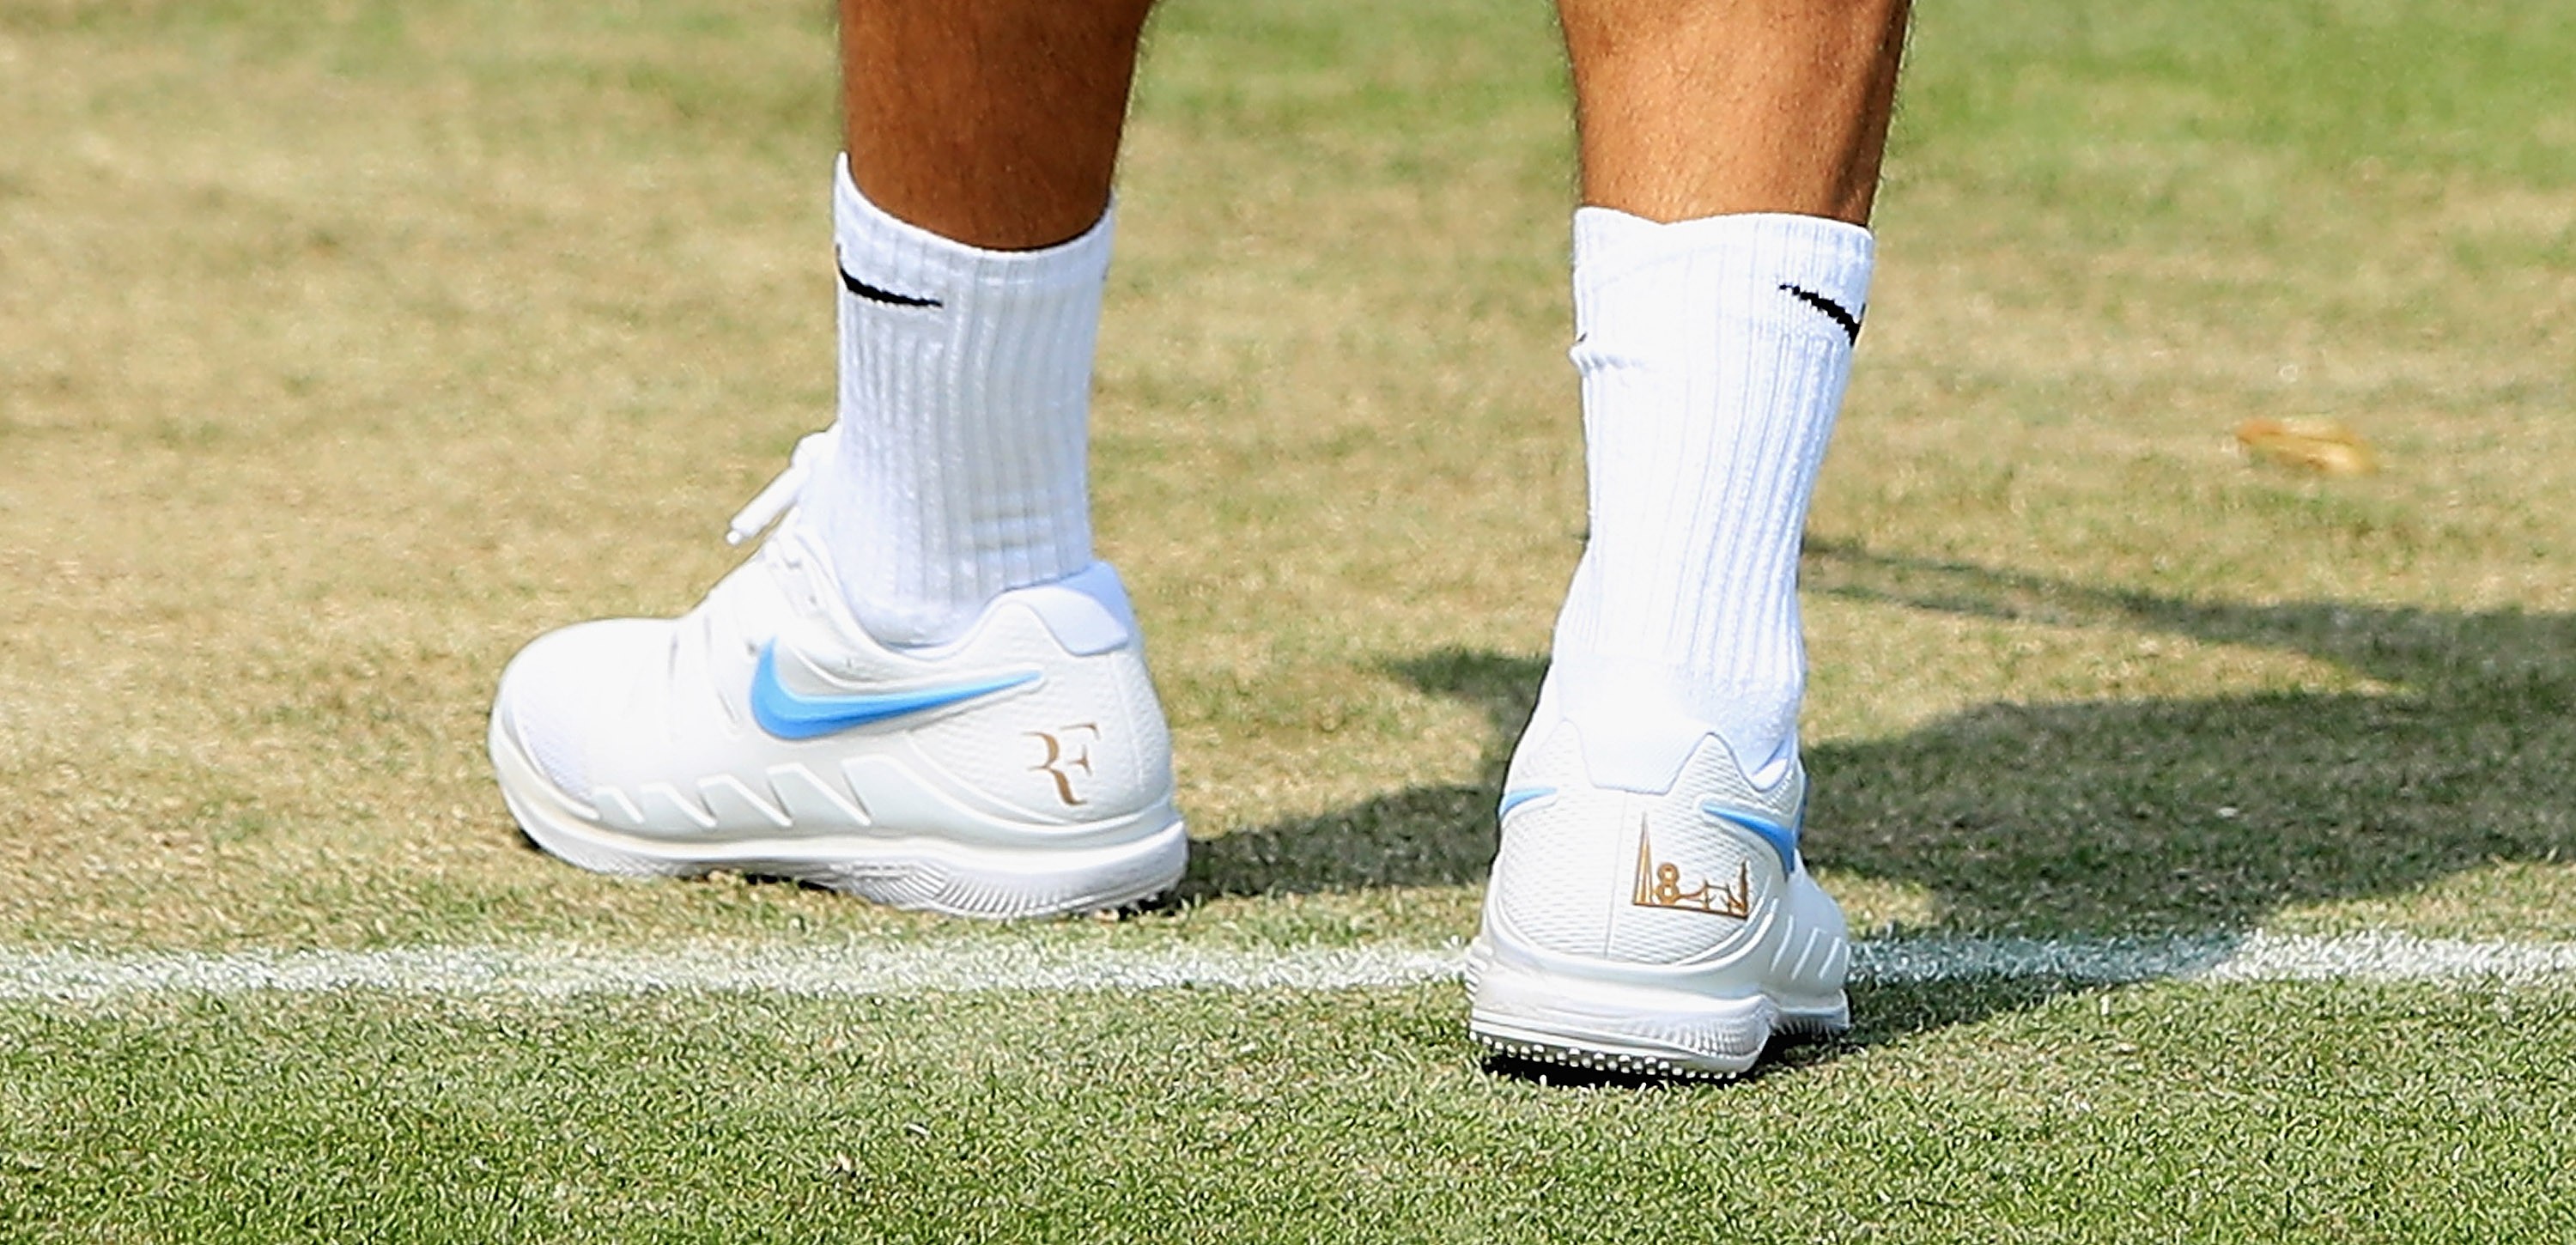 Nos pés, Roger Federer ainda usa Nike (e a logomarca RF). (Foto: Getty Images/Matthew Lewis)